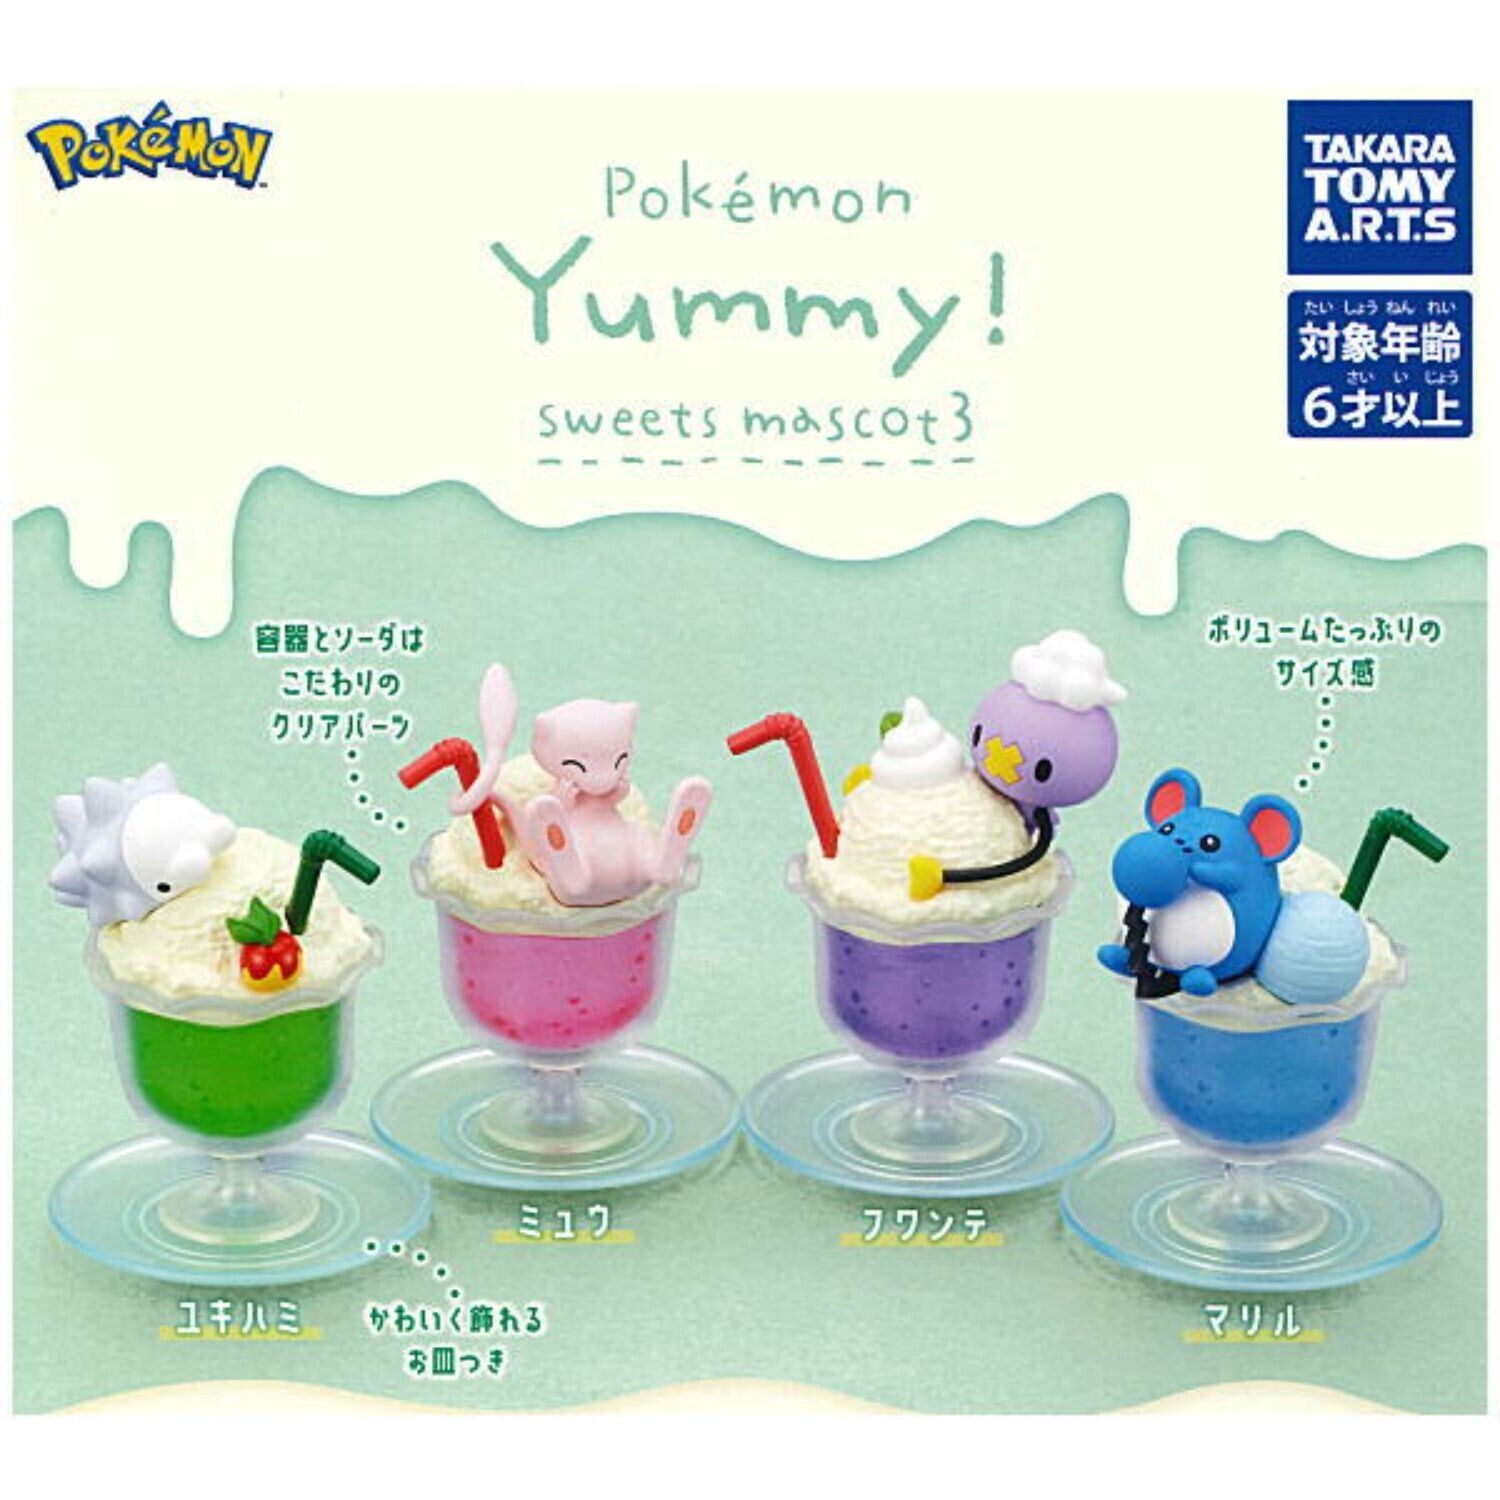 Pokemon Yummy Sweets mascot Capsule Toy 4 Types Full Comp Set Gacha New Japan